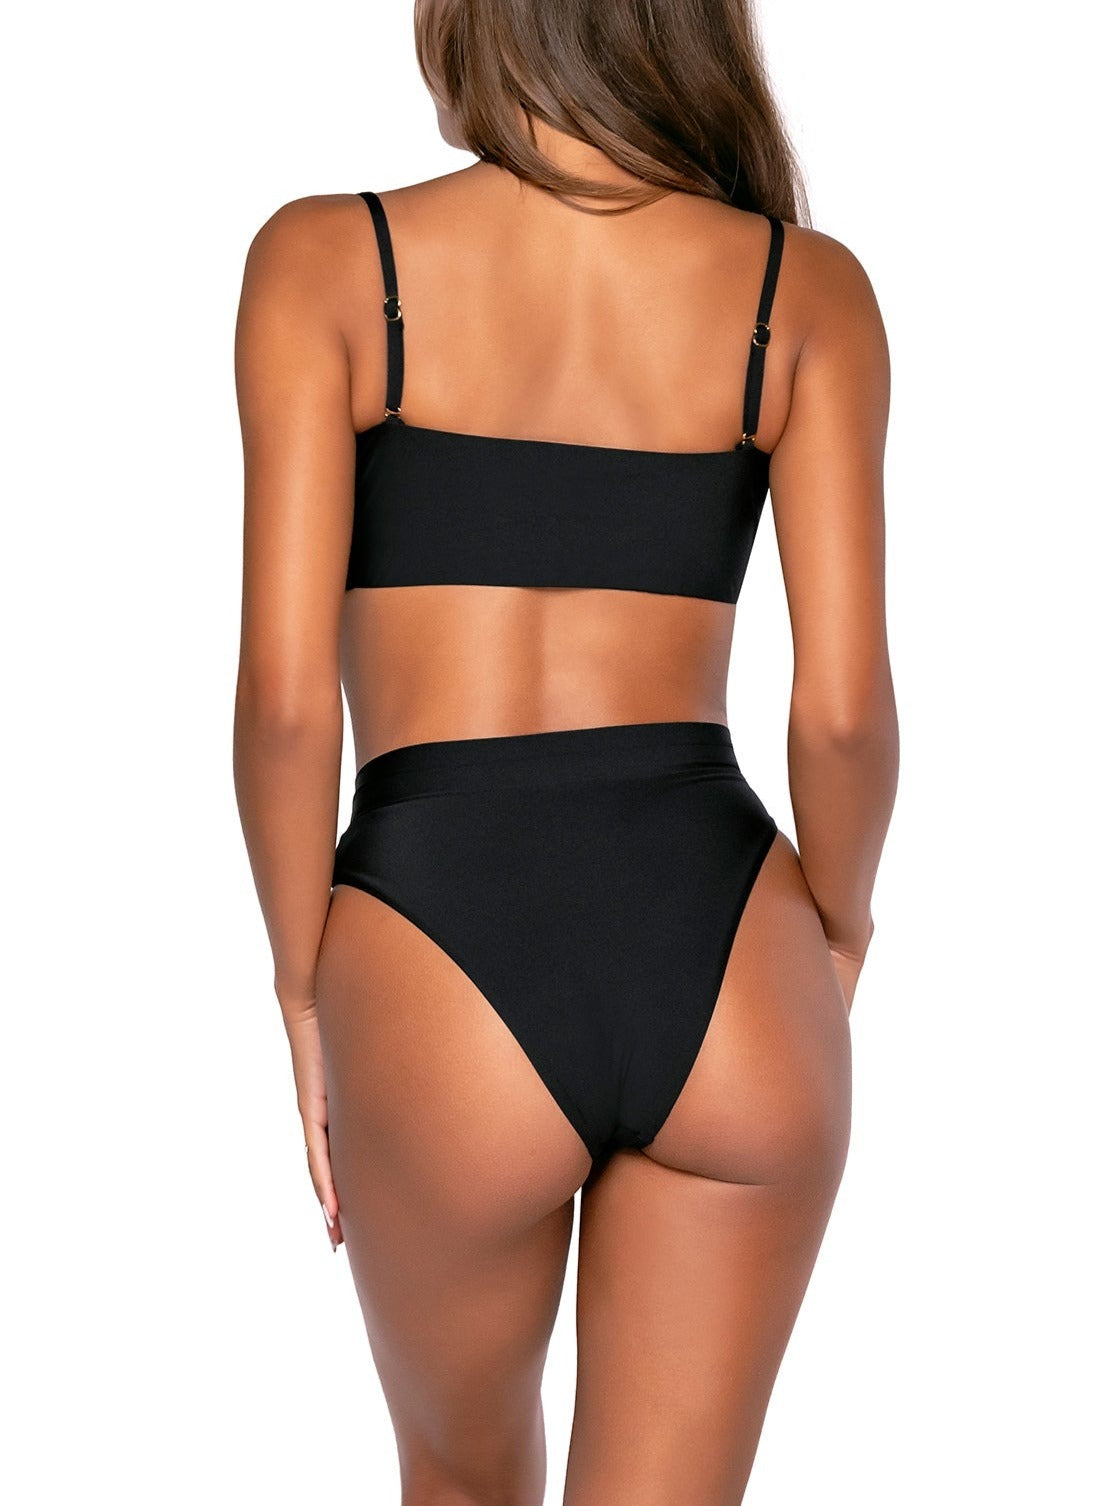 B Swim "Brands,Swimwear" XS / BLAOU / U614 B Swim Black Out Eloise Top